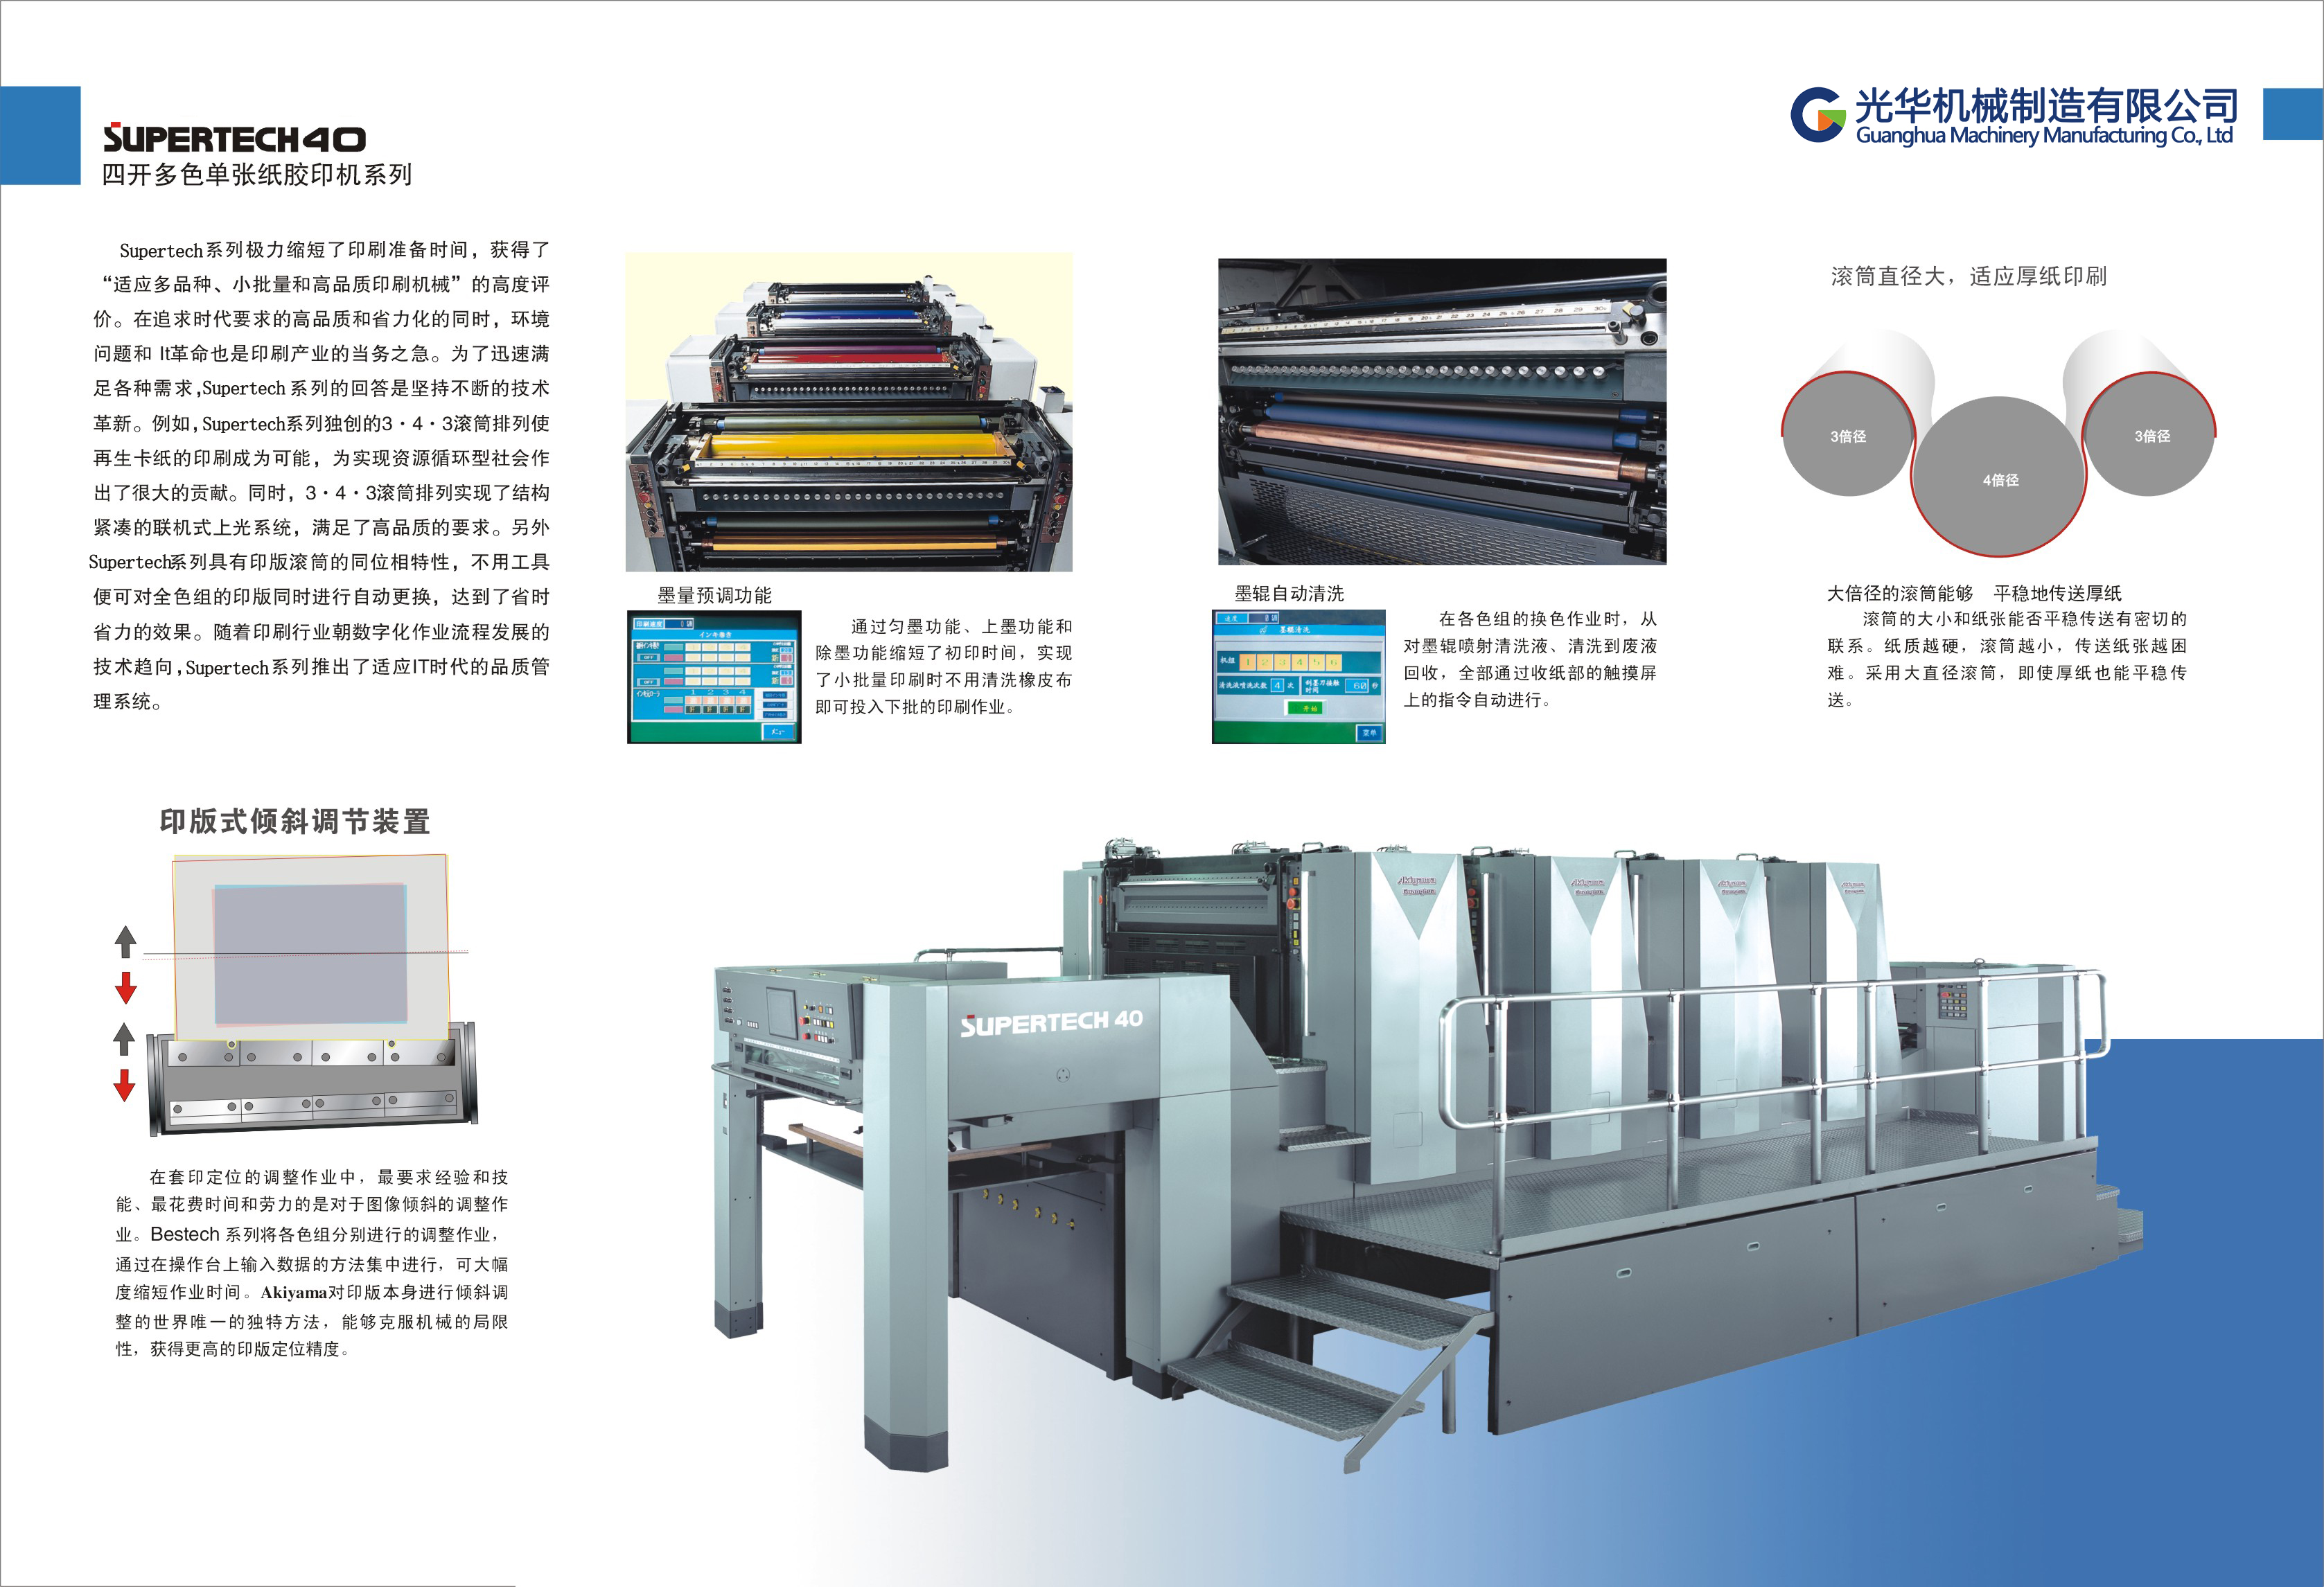 SUPERTECH-440 Single sheet four color offset printing machine